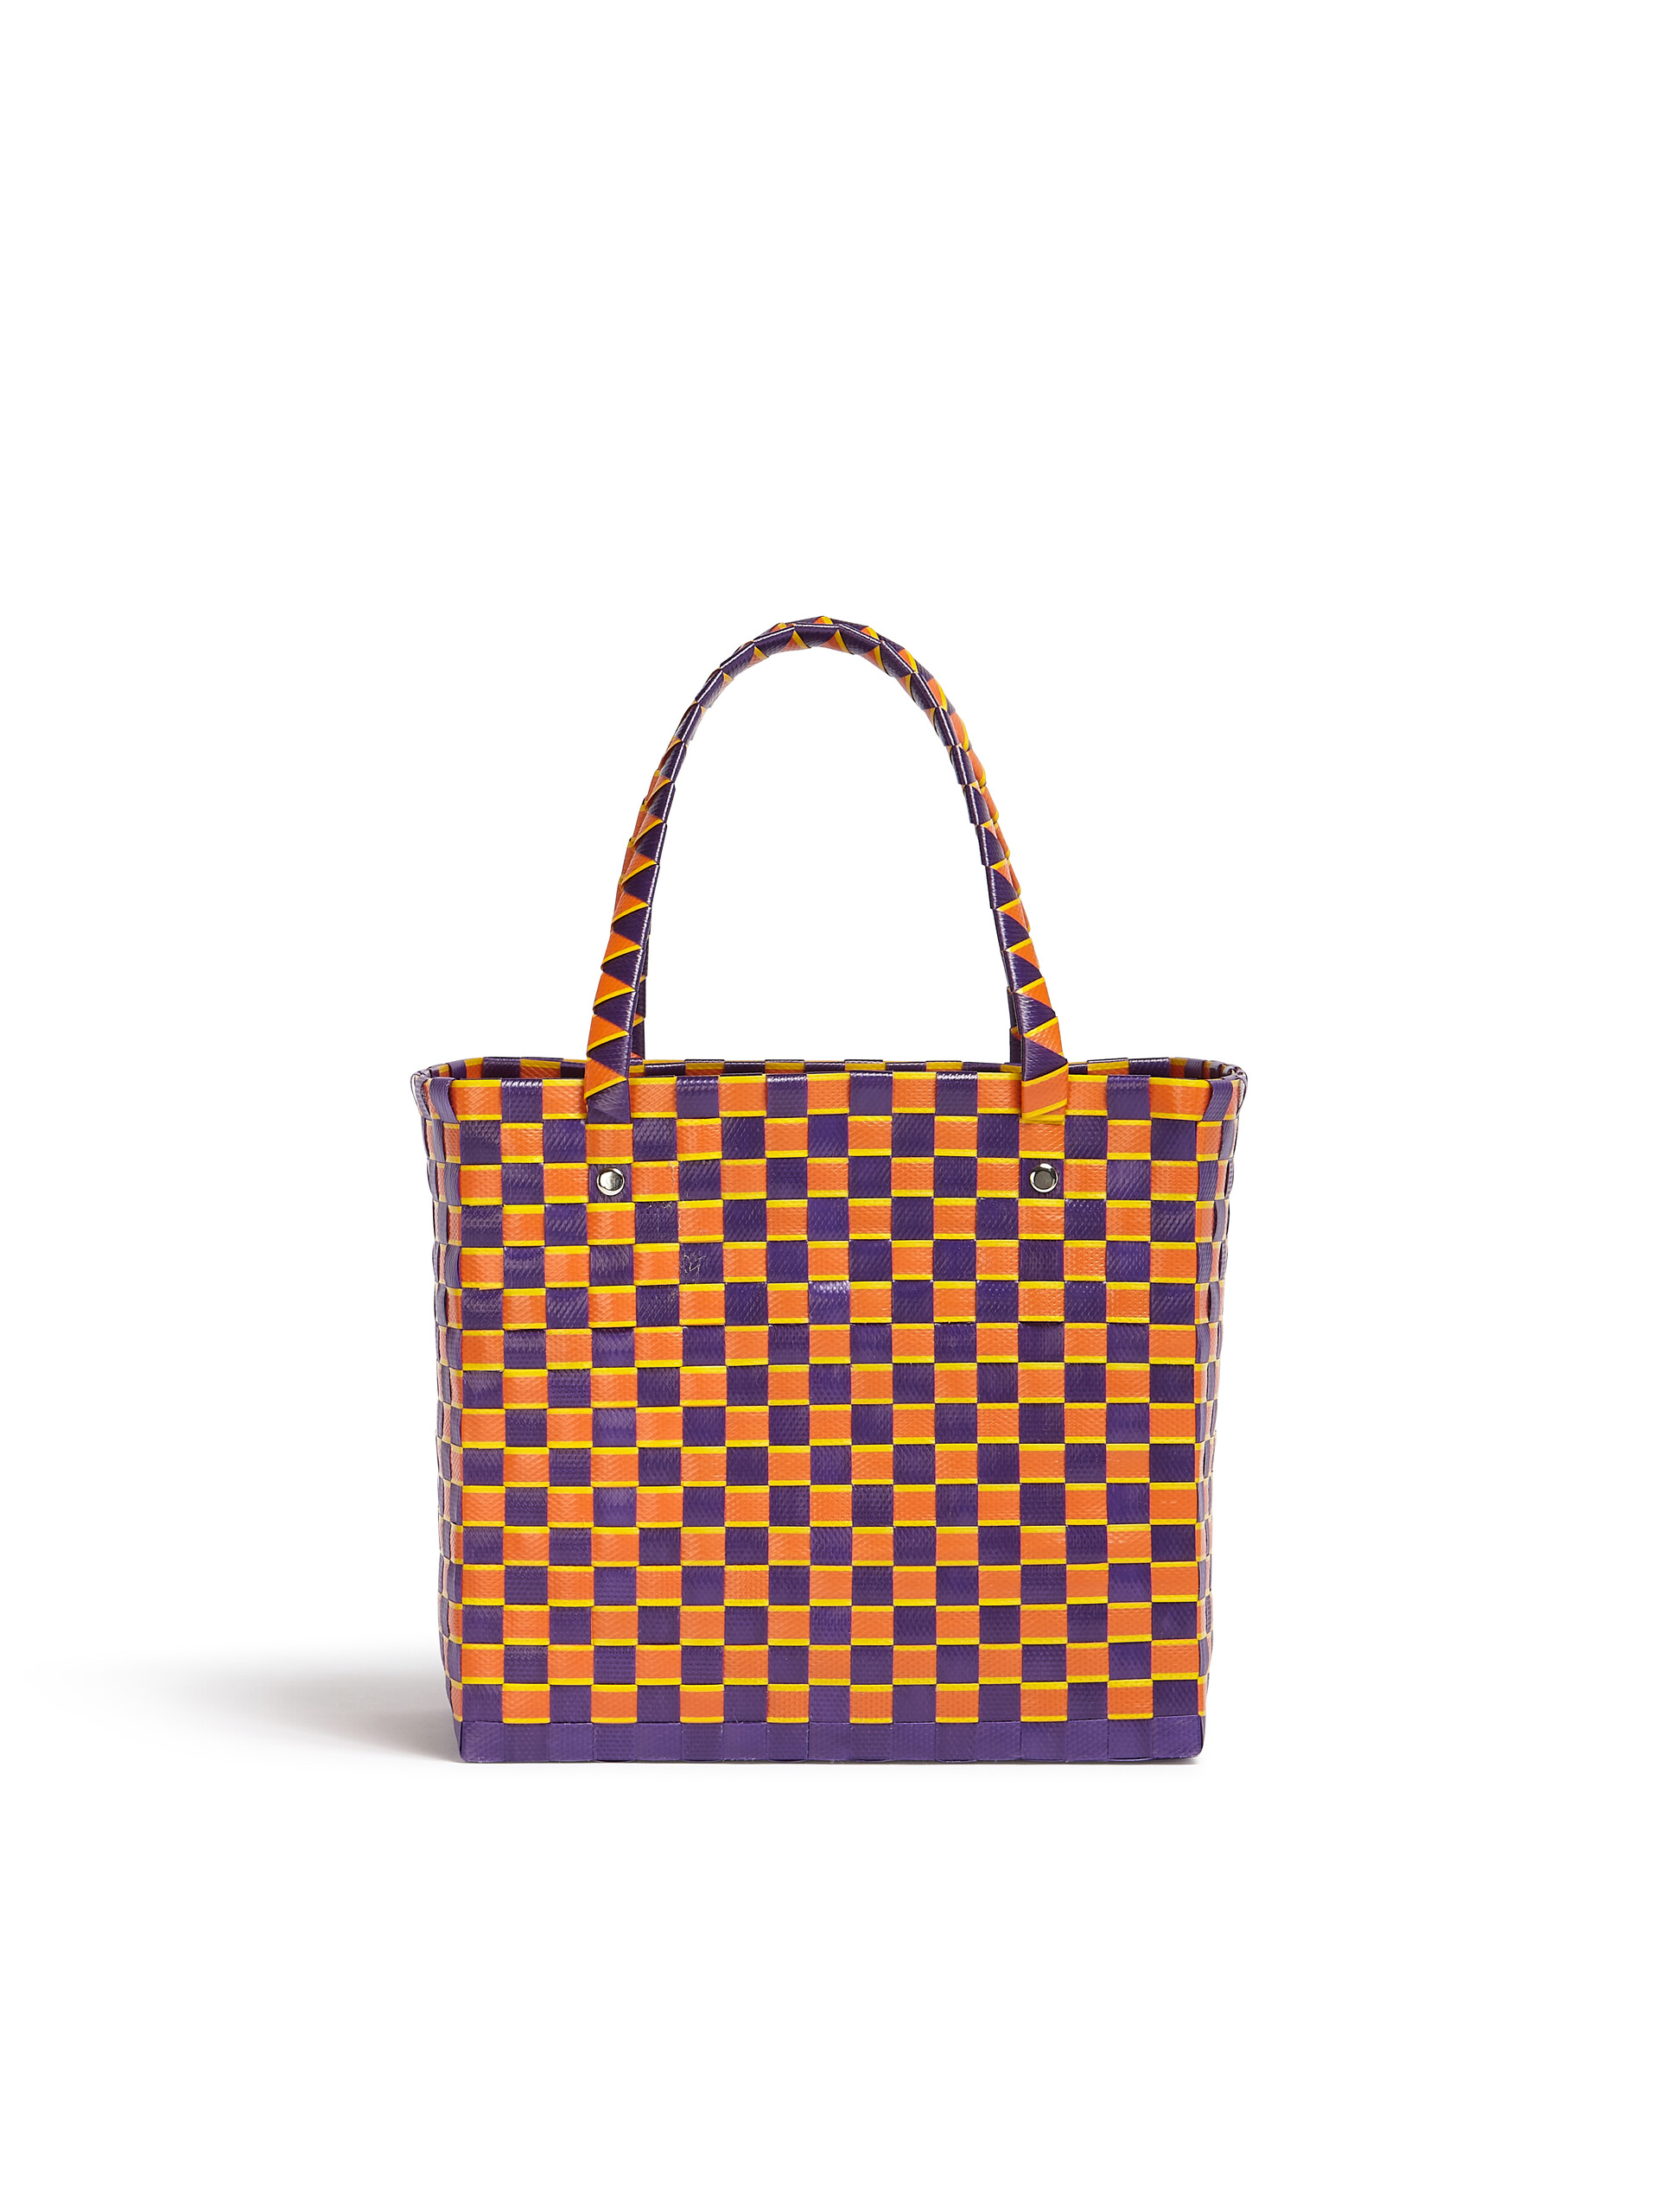 MARNI MARKET FLOWER MINI BASKET bag in orange butterfly motif - Bags - Image 3